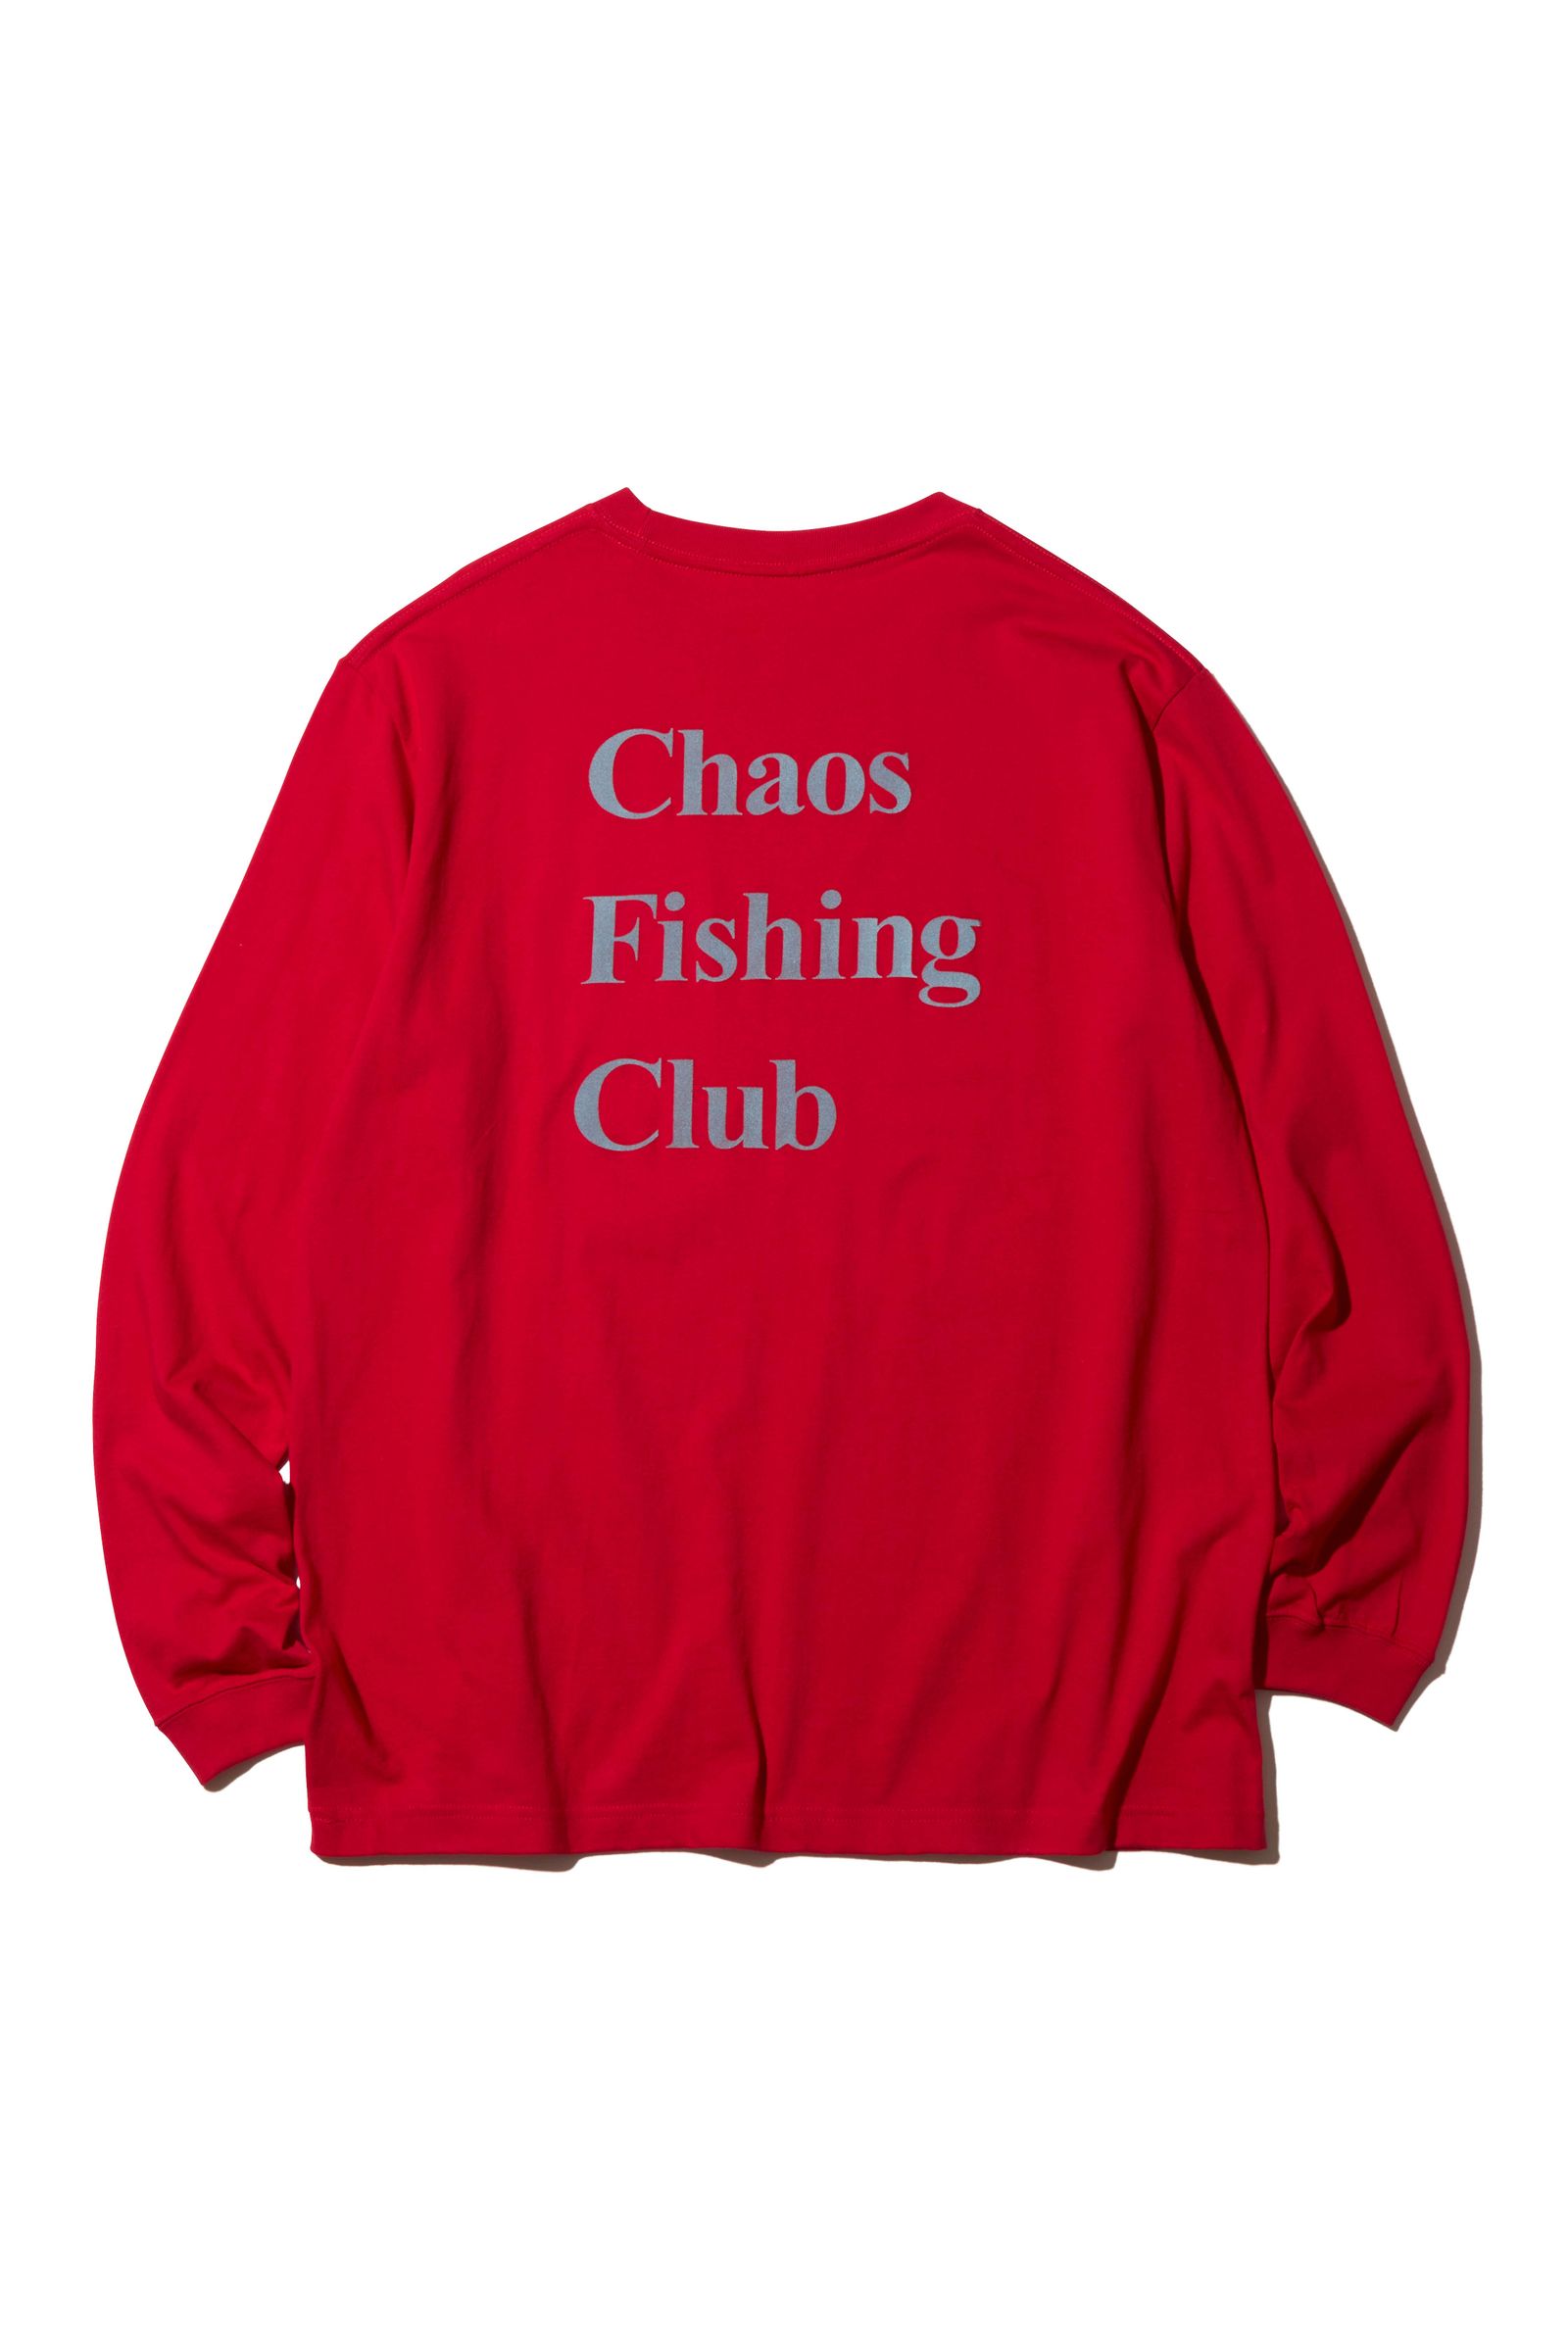 Chaos Fishing Club - OG LOGO L/S TEE / Red | Stripe Online Store